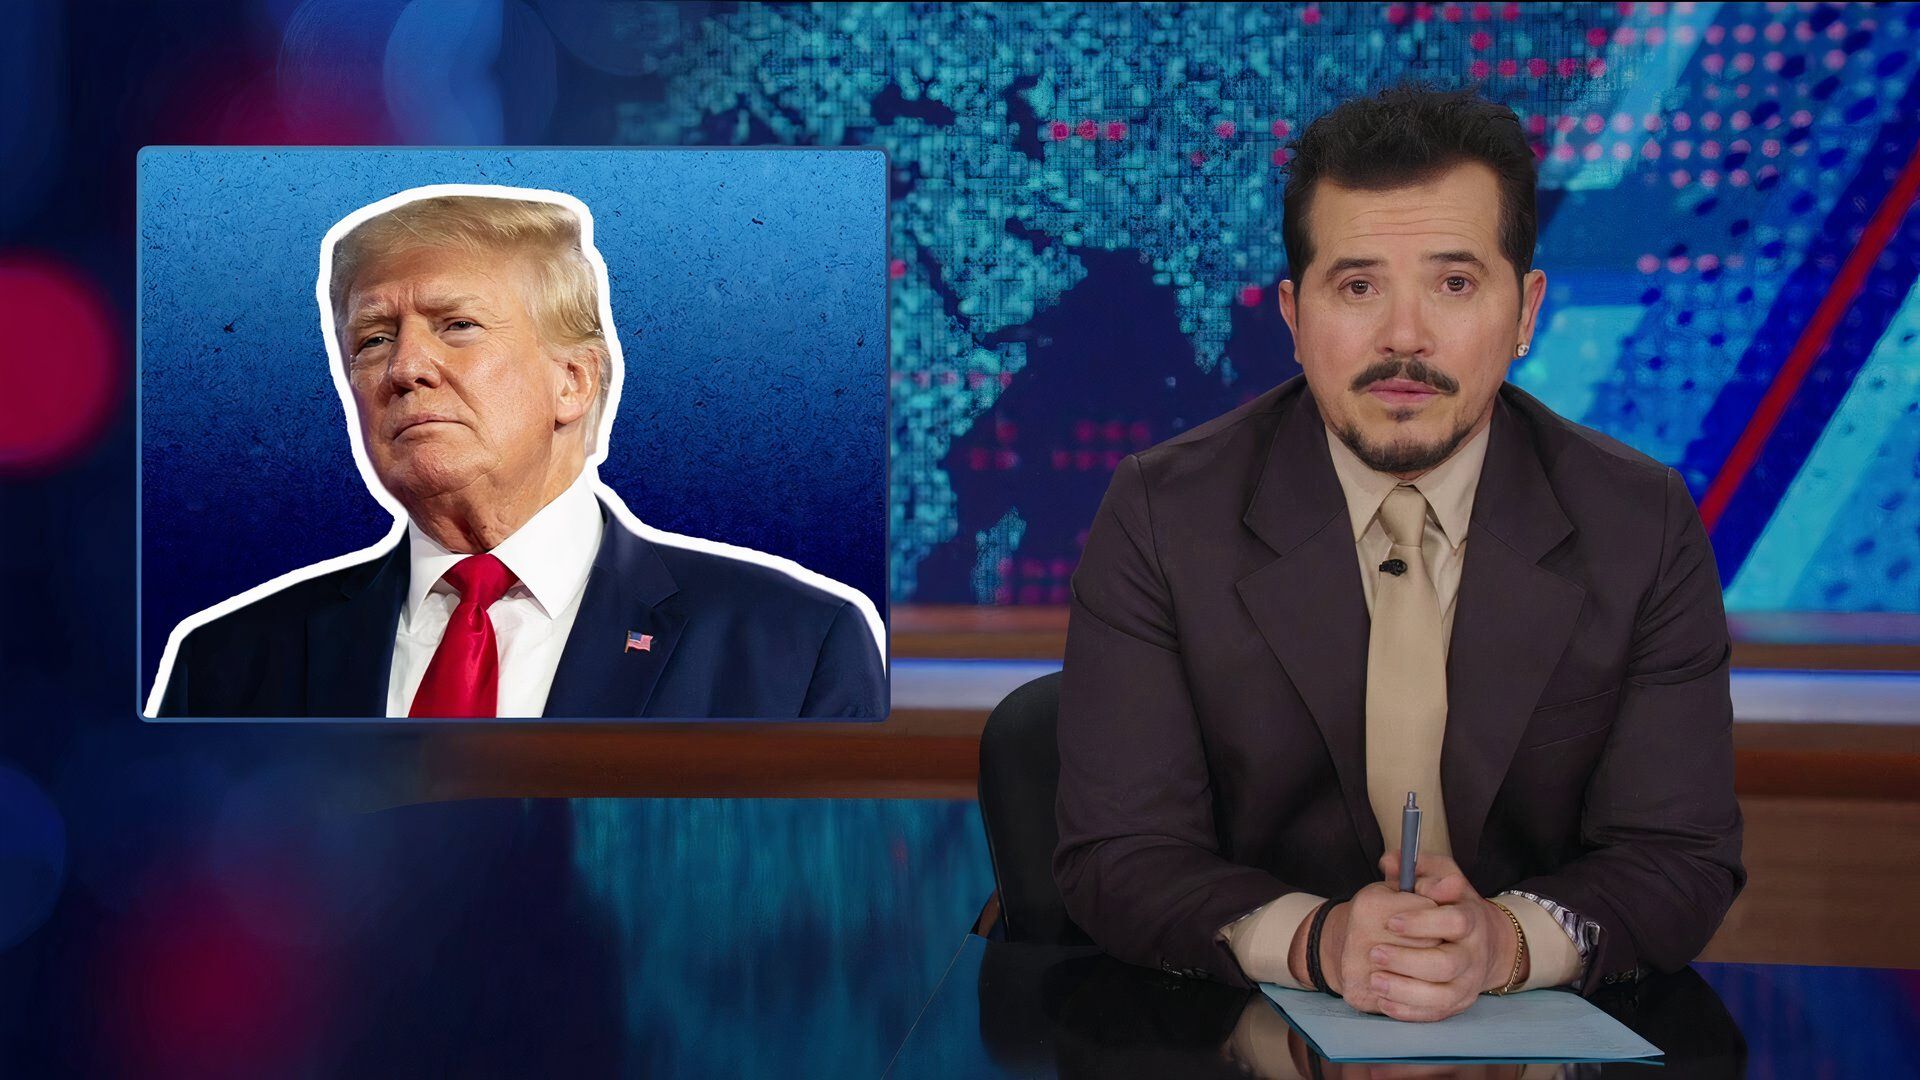 John Leguizamo hosting the Daily Show next to an image of Donald Trump